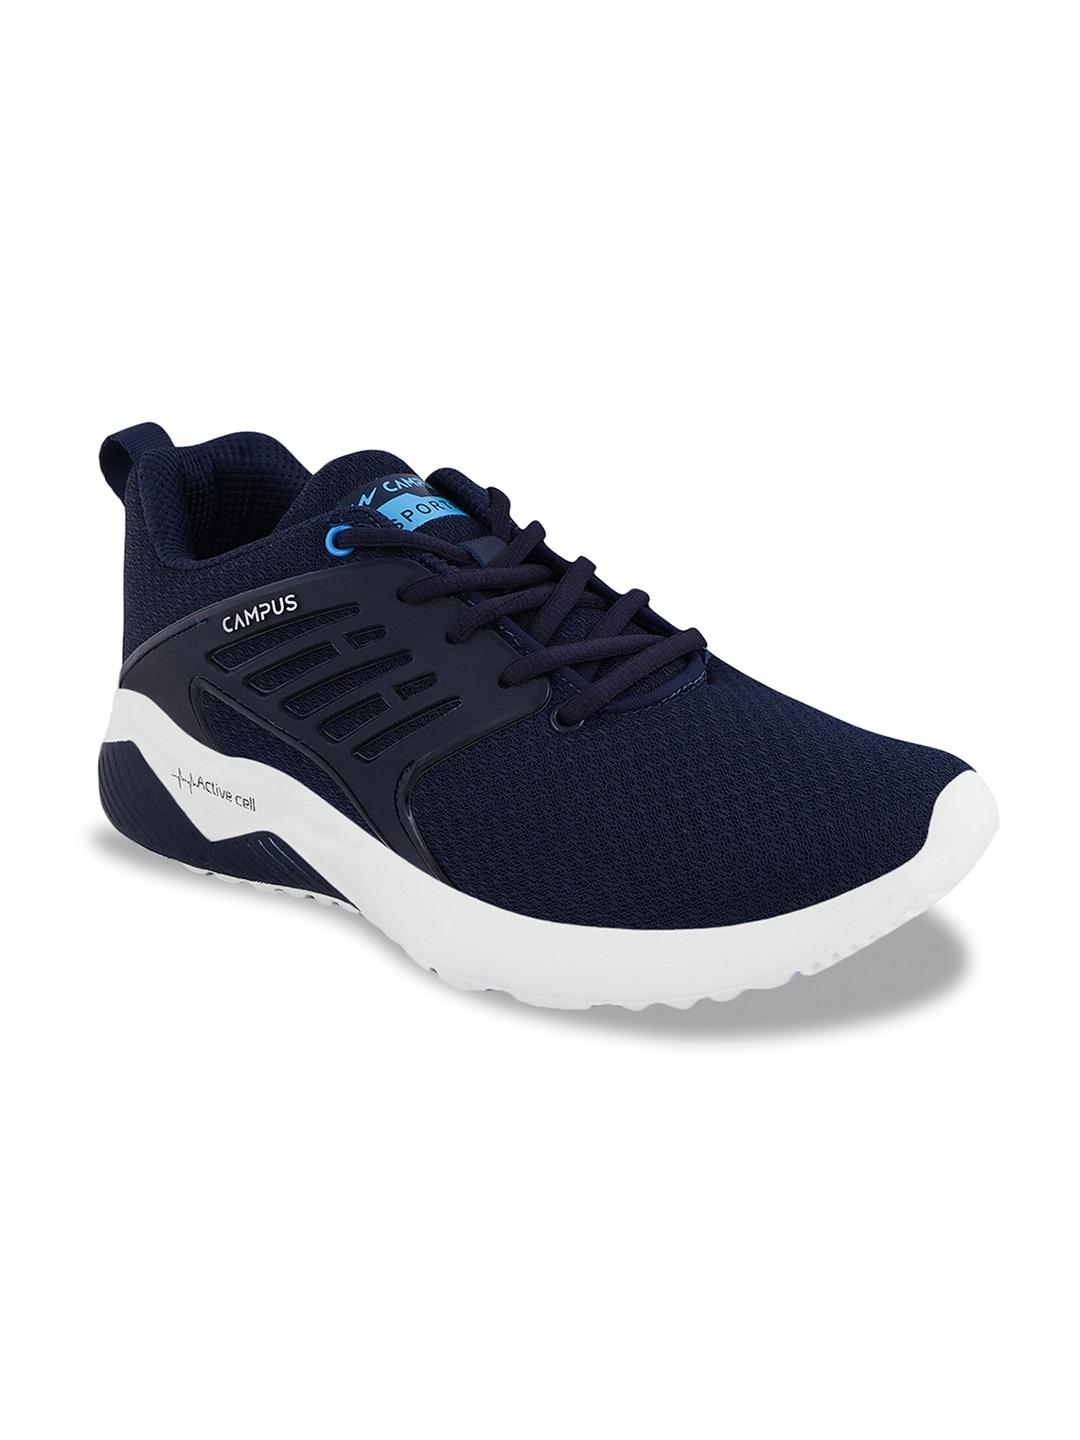 campus men navy blue sports running shoes